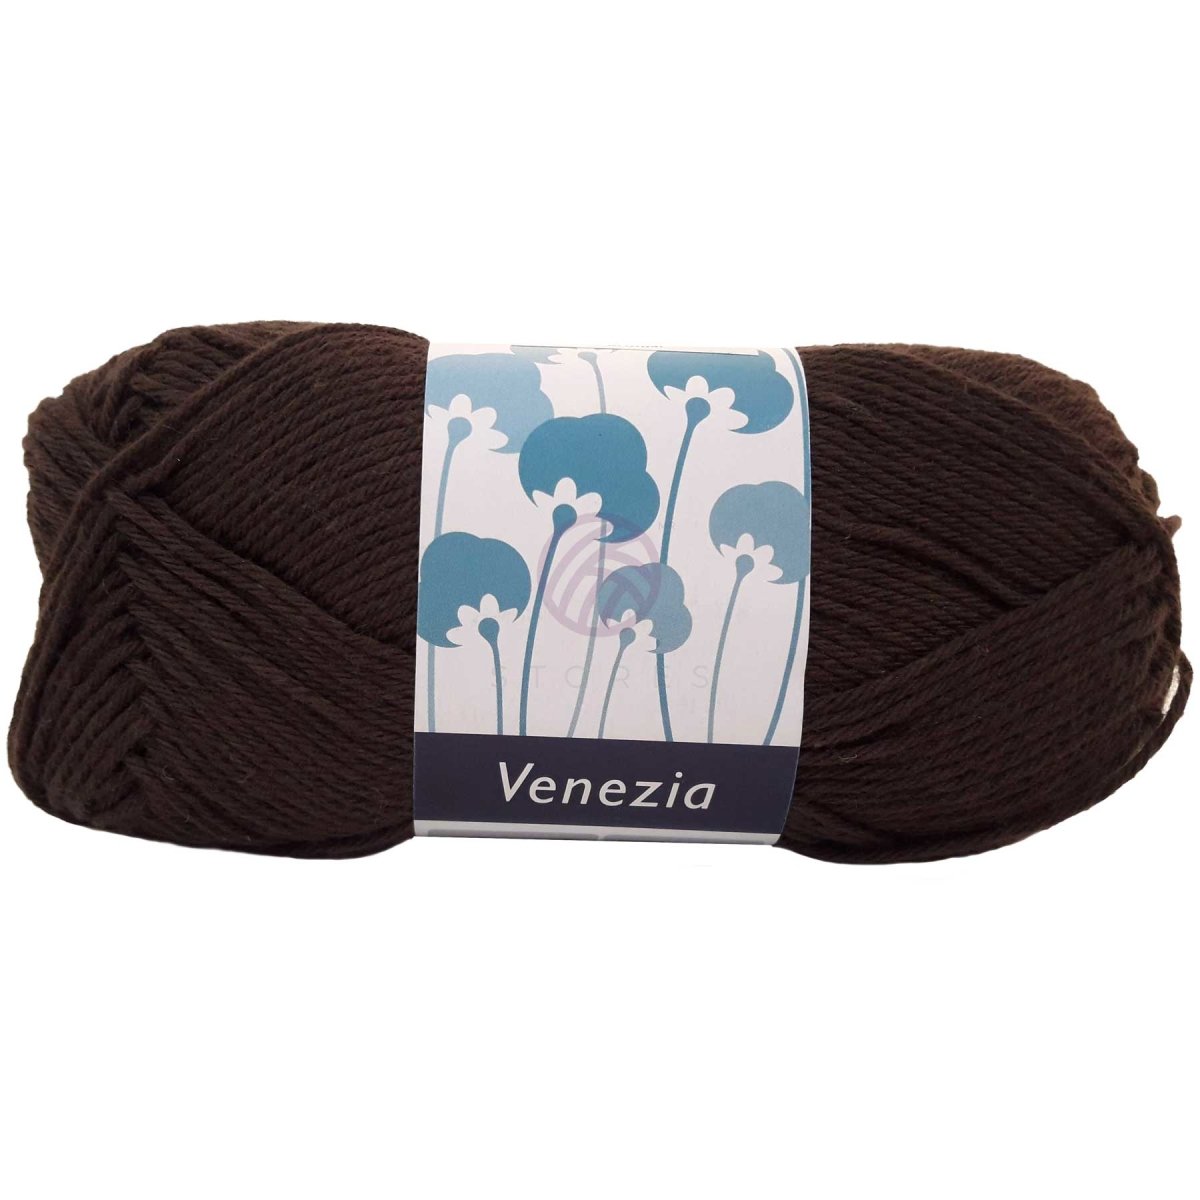 VENEZIA - Crochetstores204-055606850204053